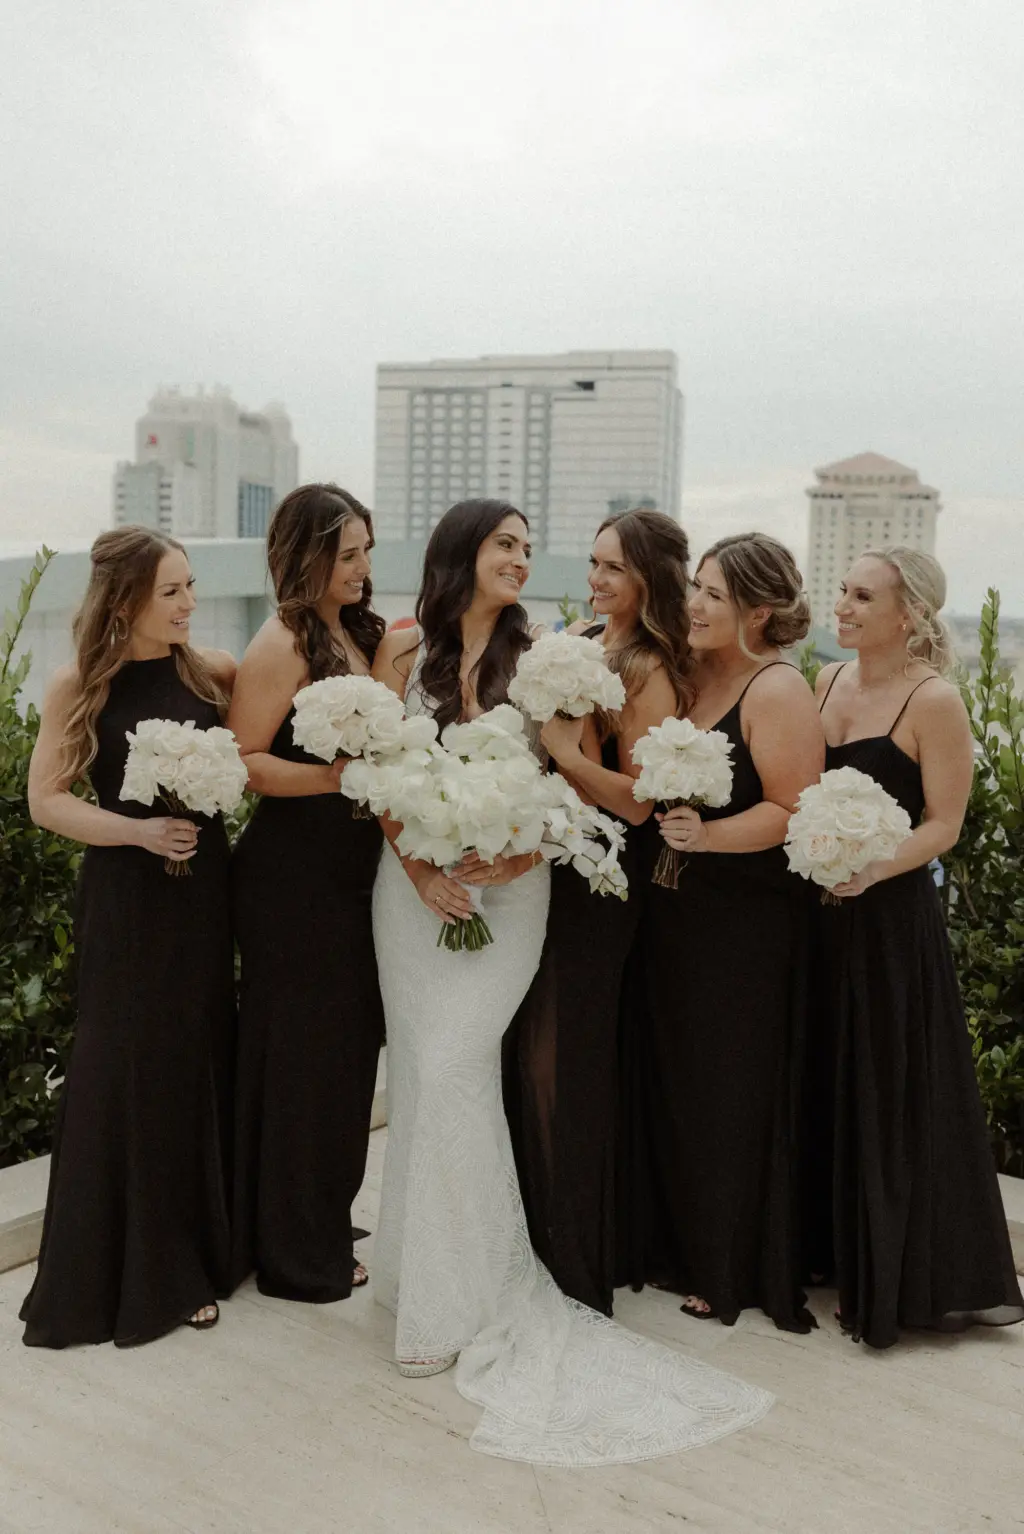 Mismatched Black Bridesmaids Wedding Dress Ideas | White Rose Bouquet Inspiration | Tampa Bay Event Planner Breezin' Weddings